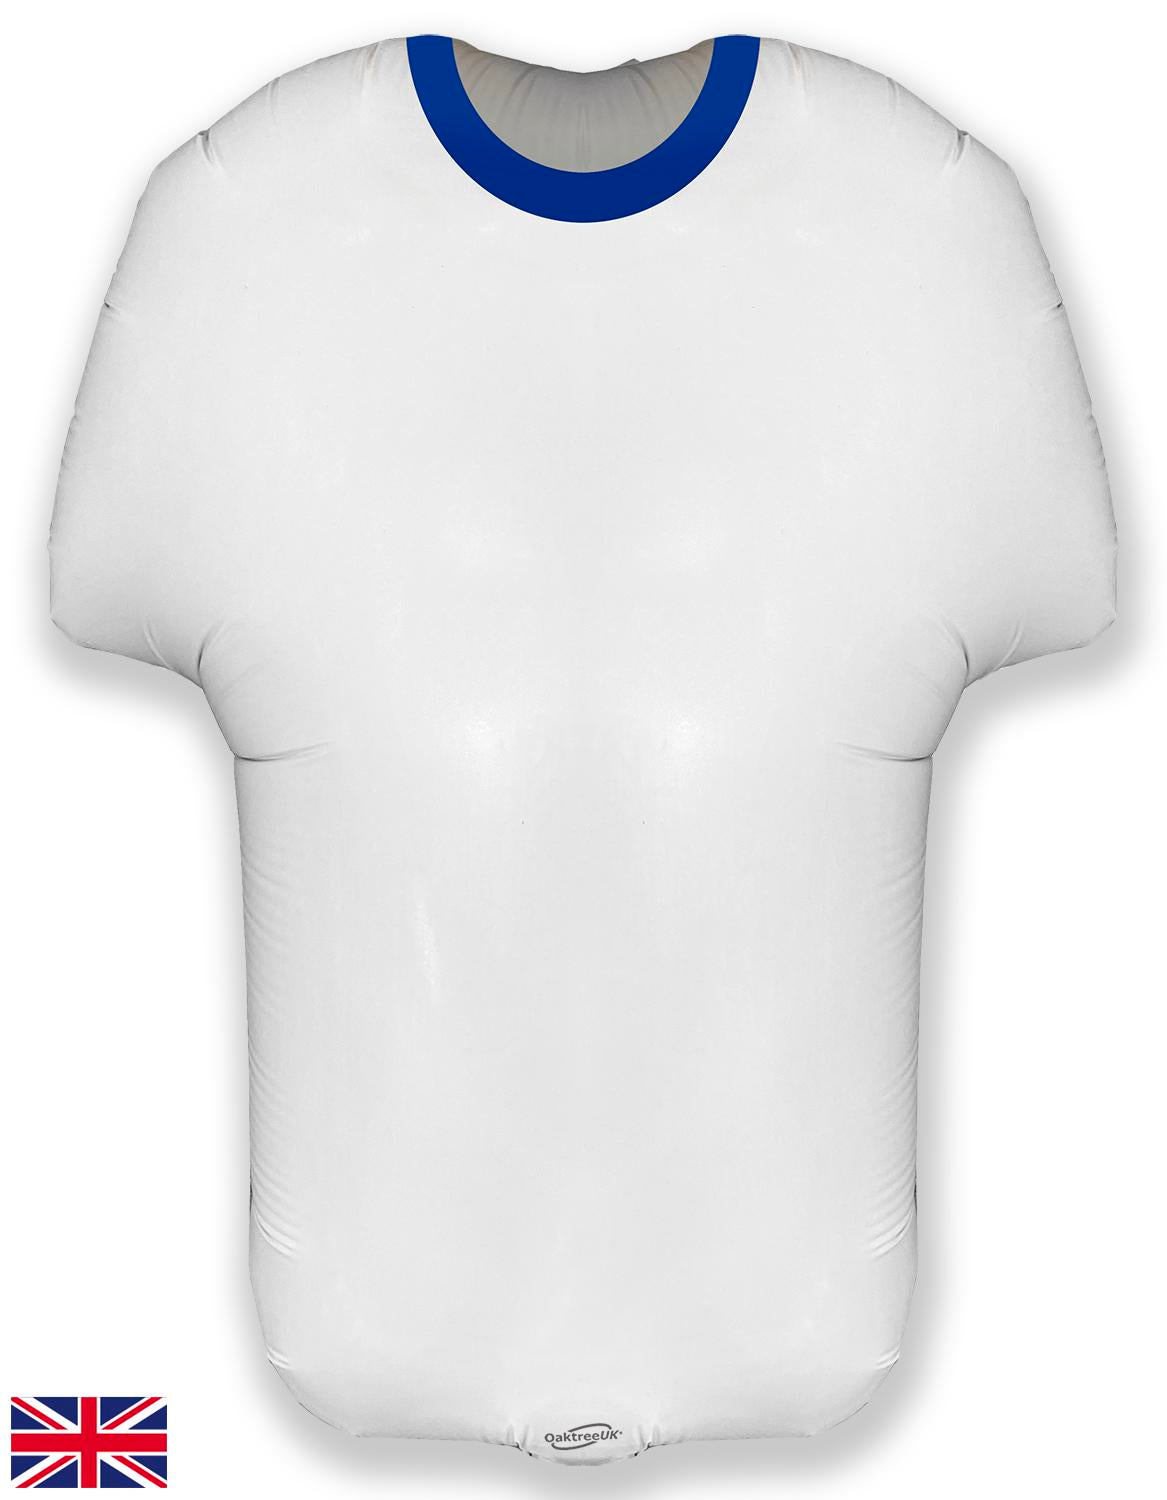 Oaktree Sports Shirt White/Blue Metallic